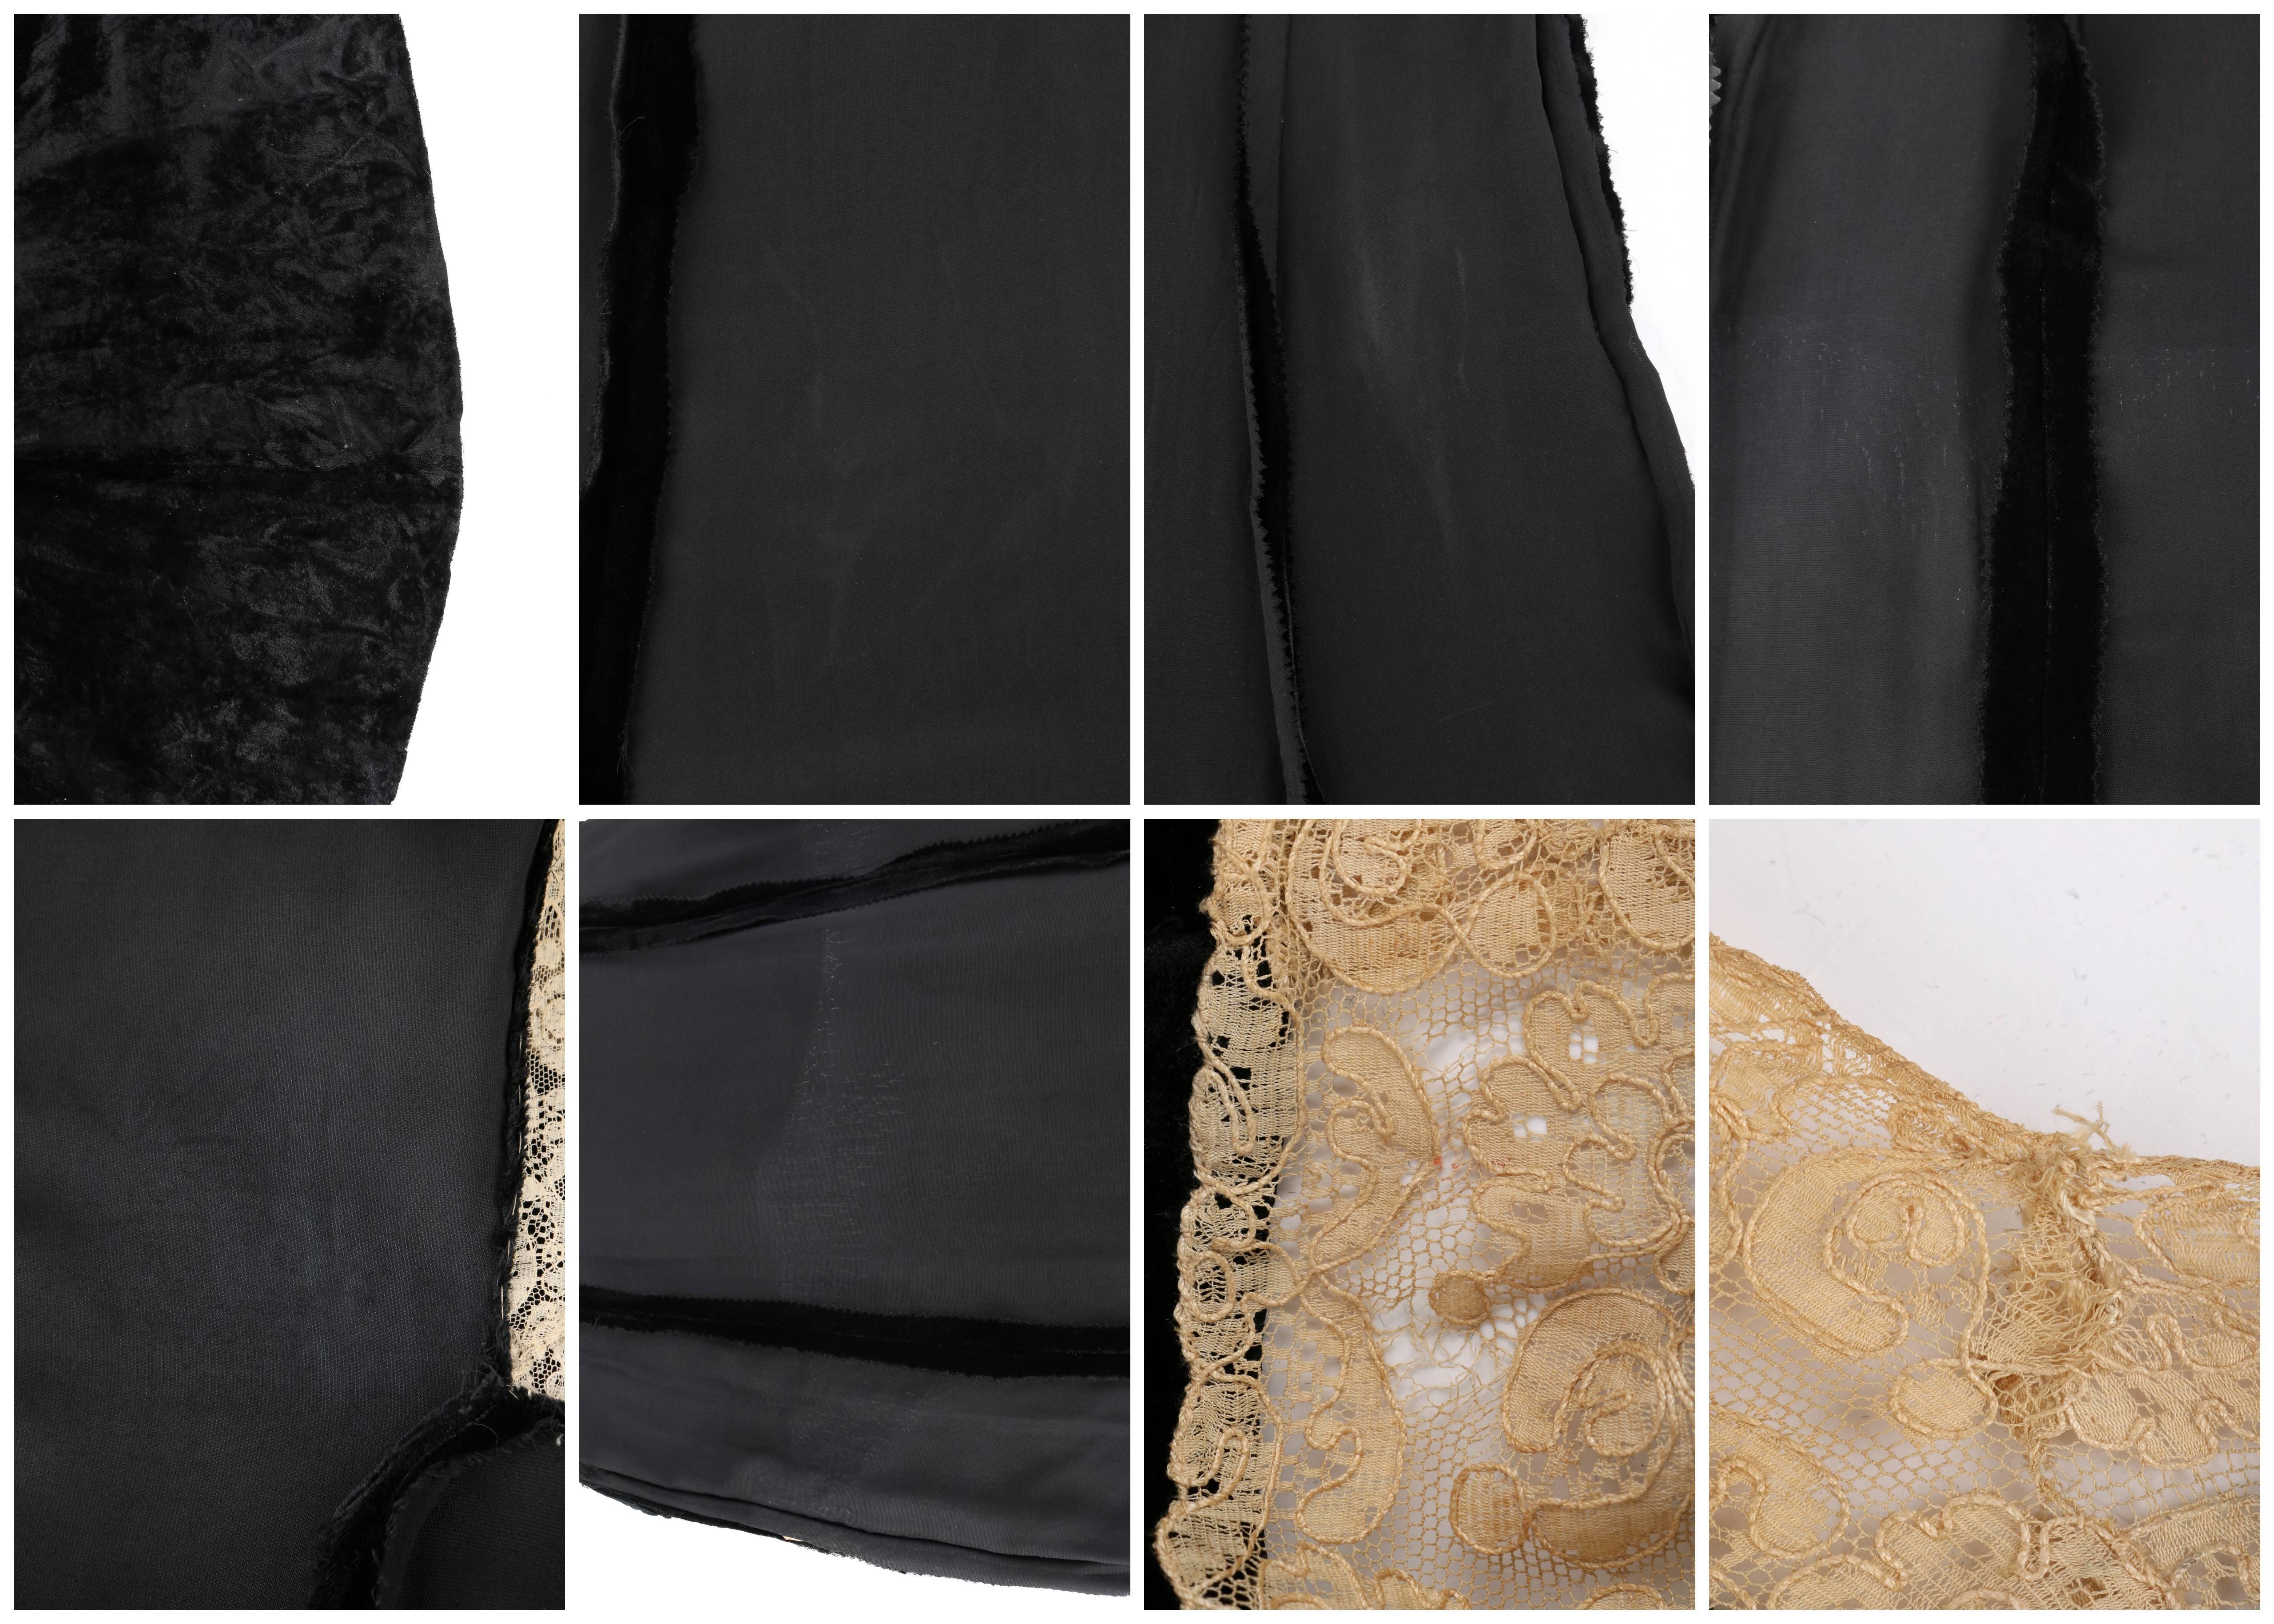 GERMAINE MONTEIL c.1930s Black Silk Velvet Belted Floral Lace Evening Dress Gown For Sale 3